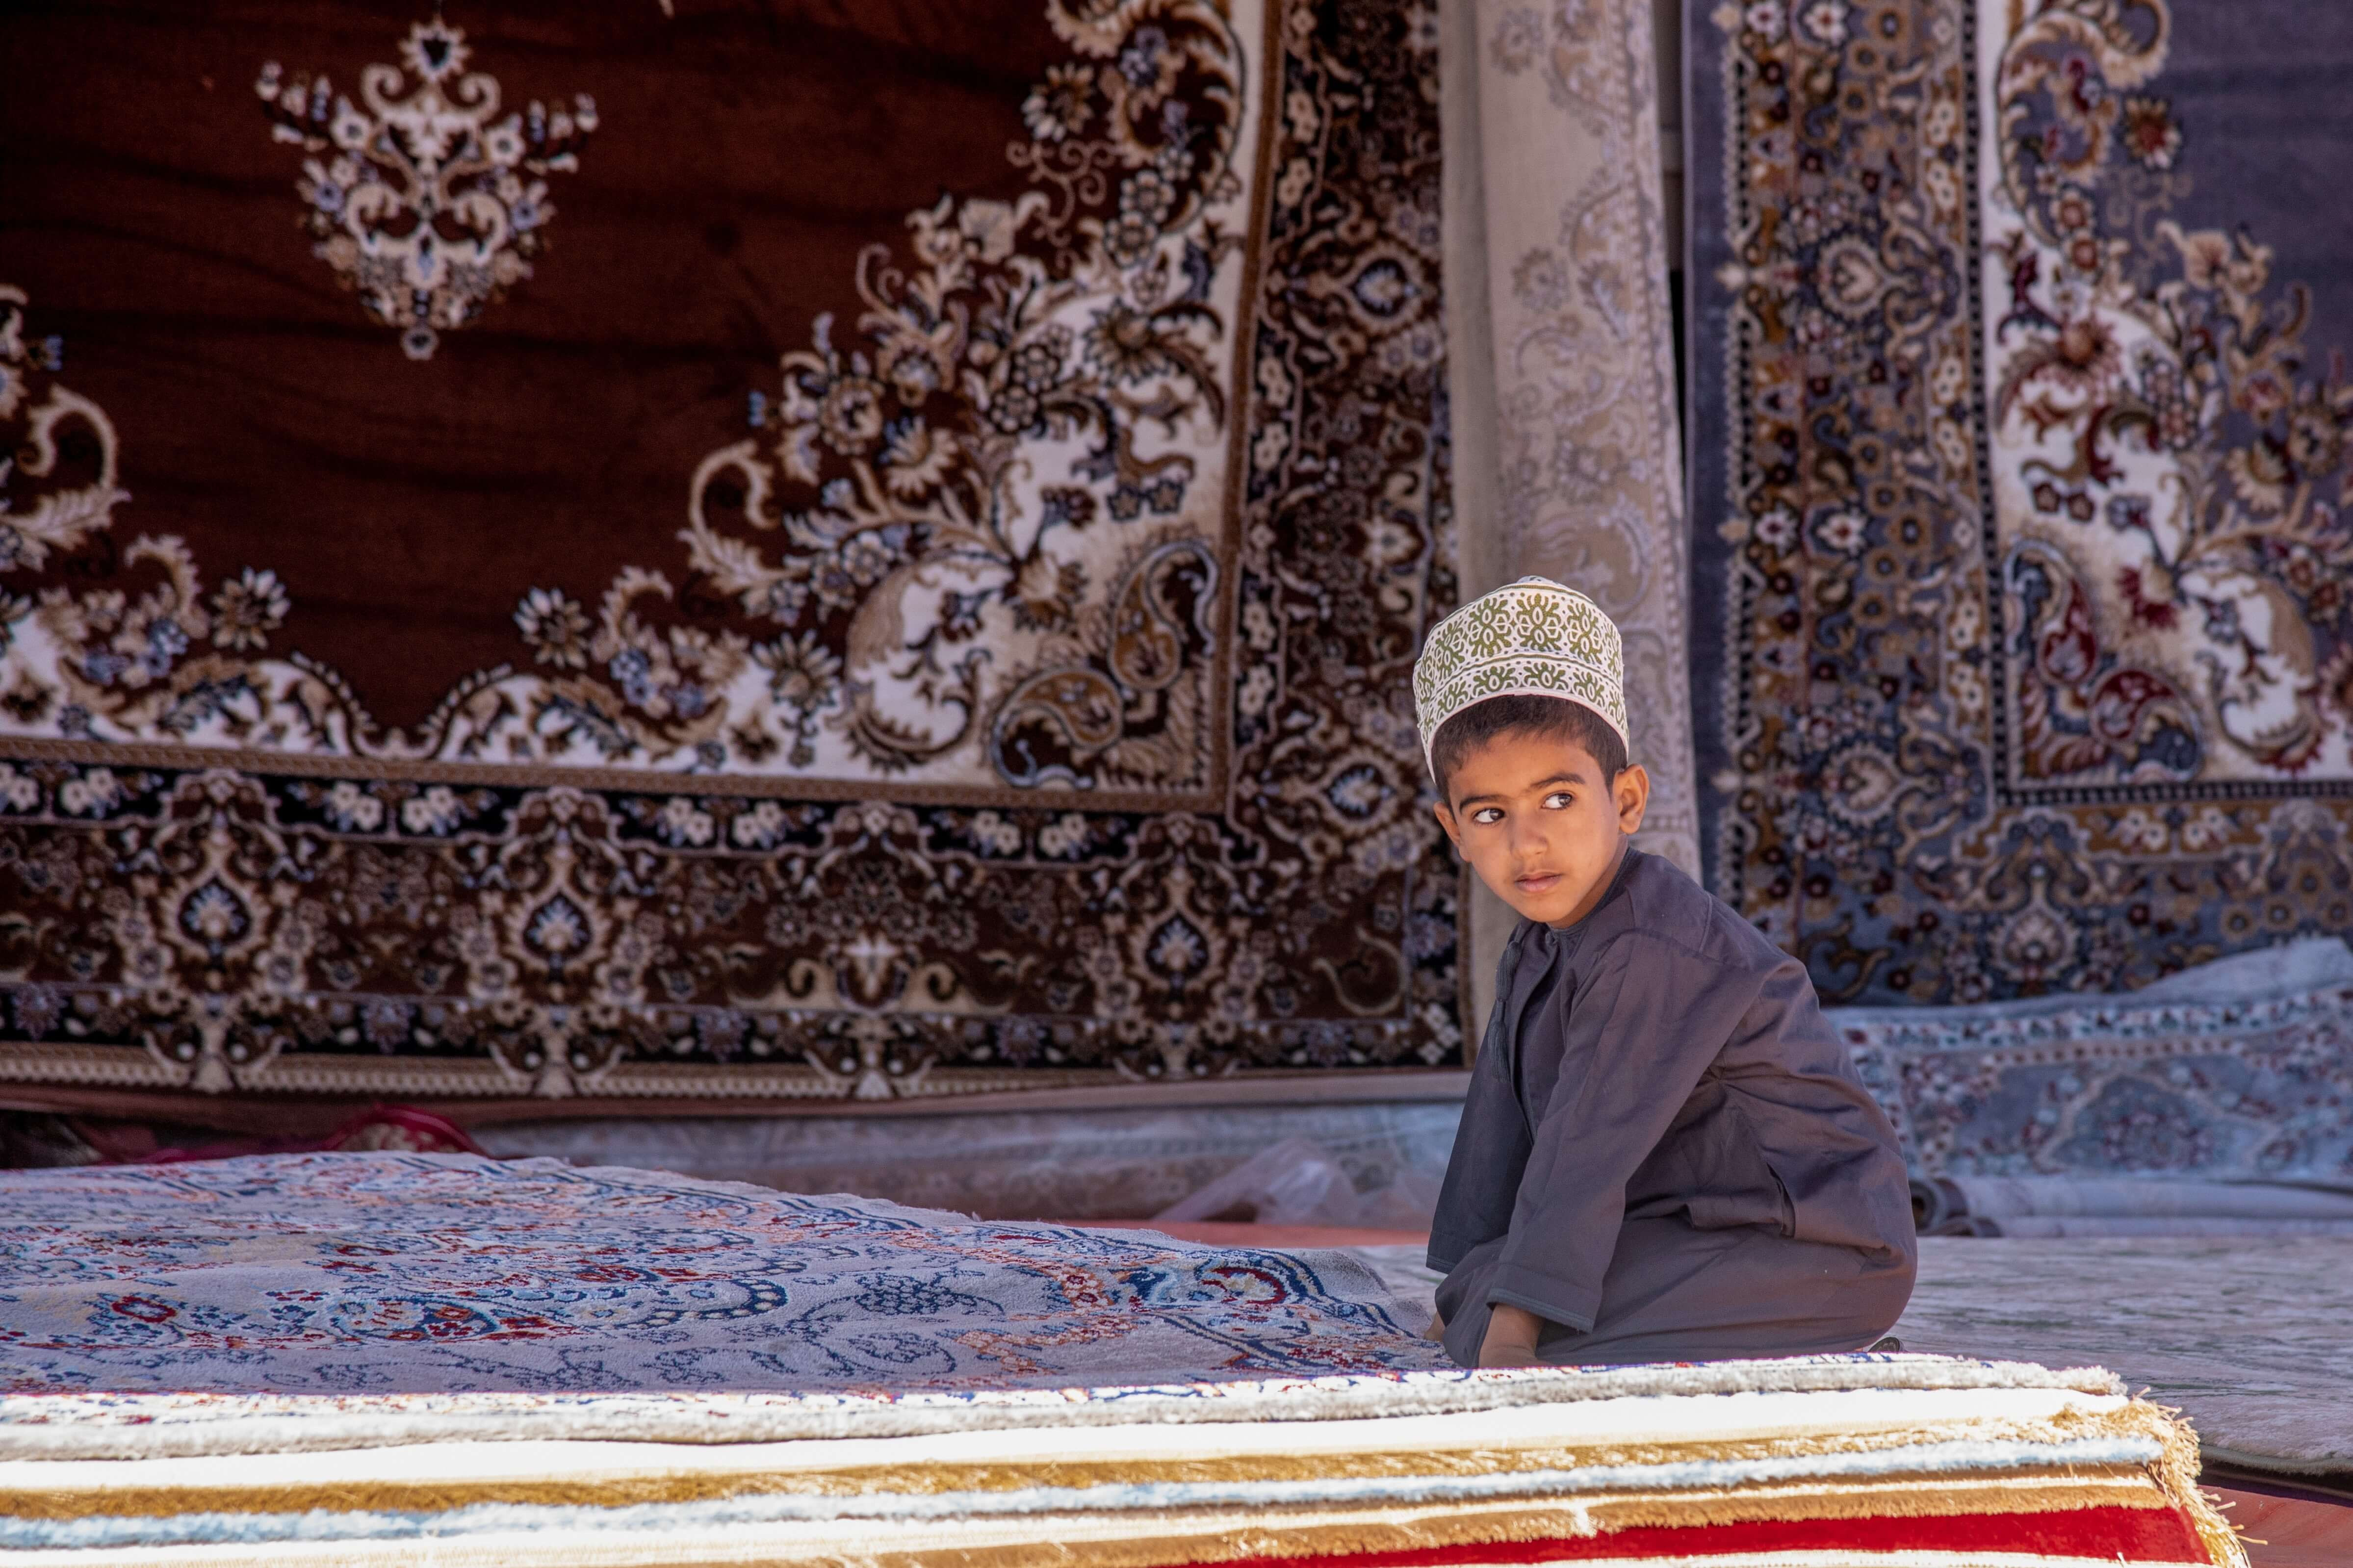 tourhub | YellowWood Adventures | Undiscovered Oman: People & landscapes 